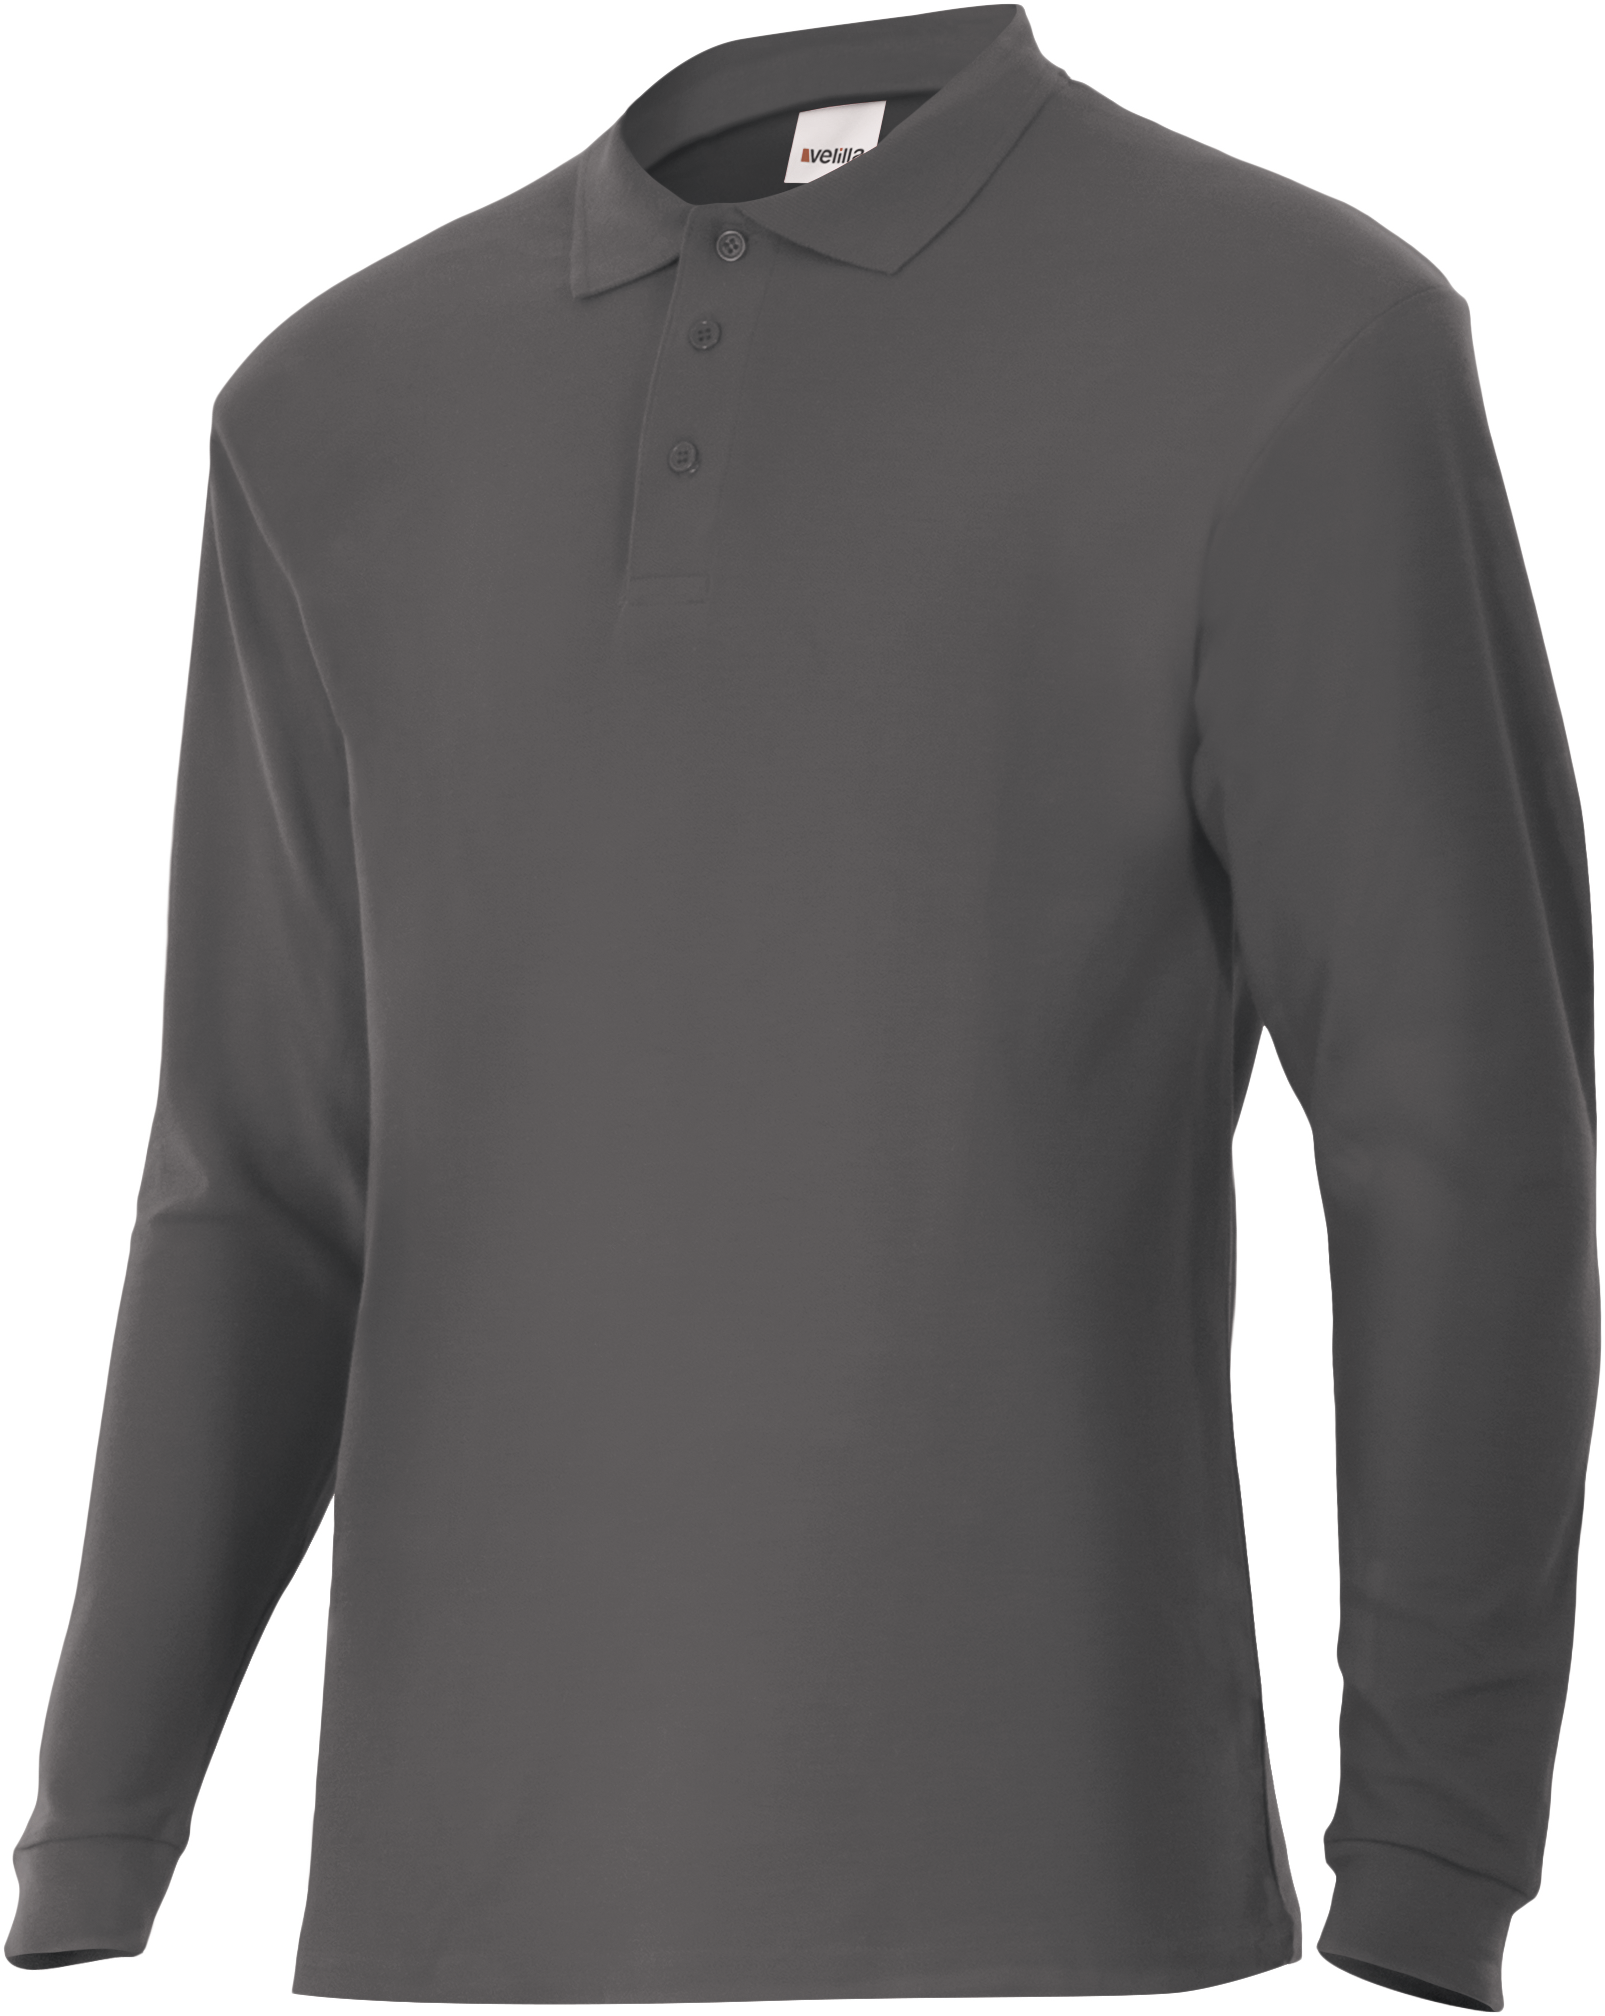 Polo Club Camiseta de mujer de manga corta con logo: a la venta a 14.99€ en